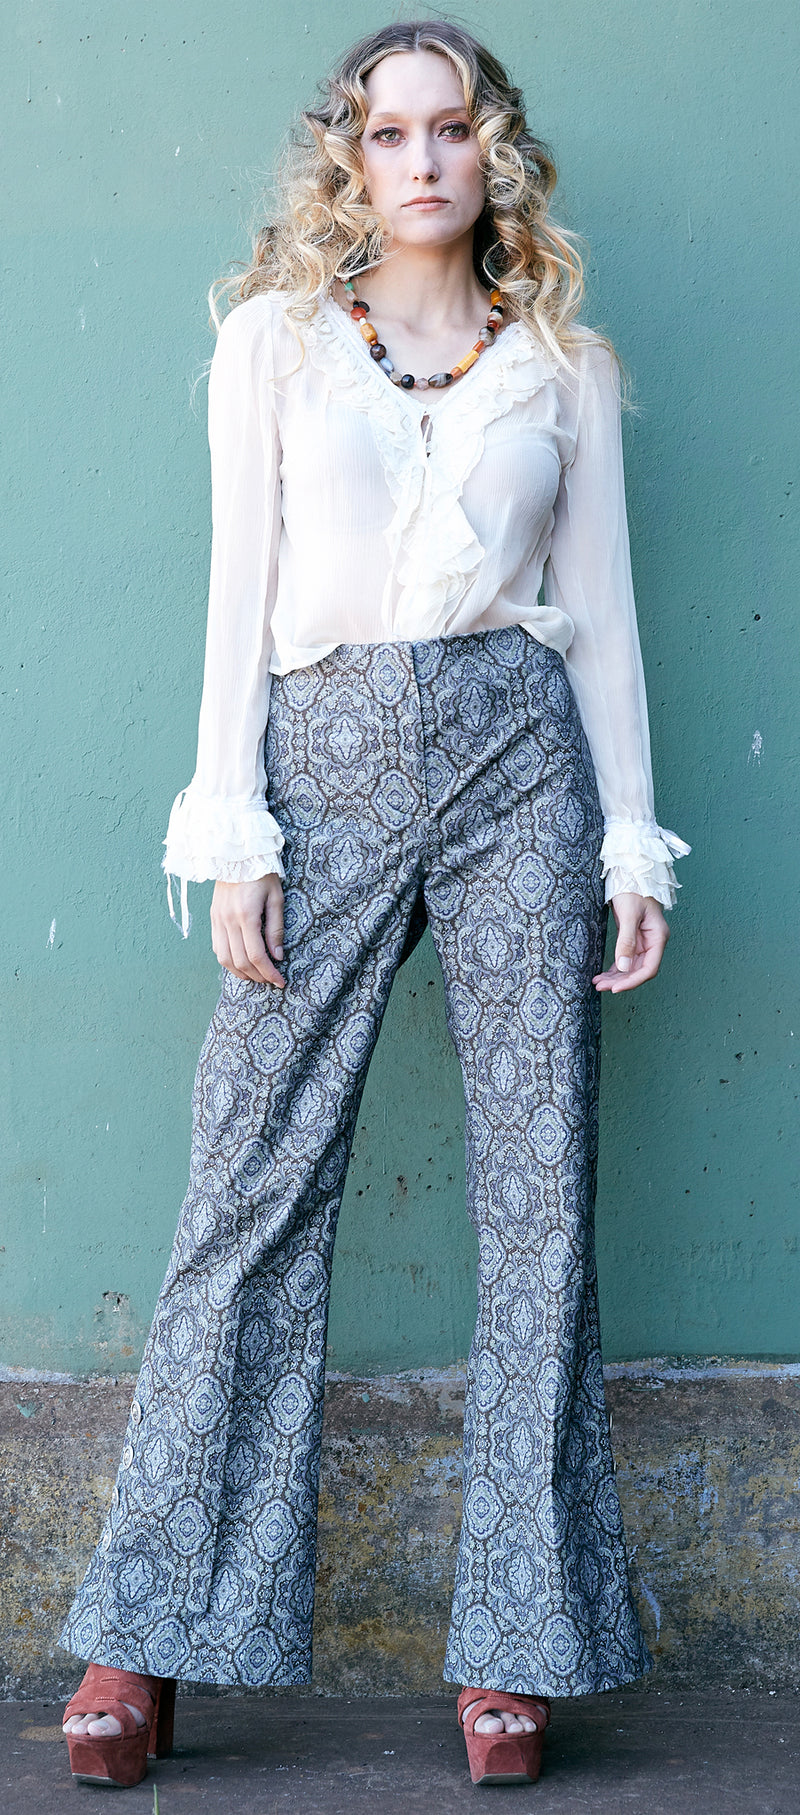 Retro chic boho style pantsuit in printed velveteen